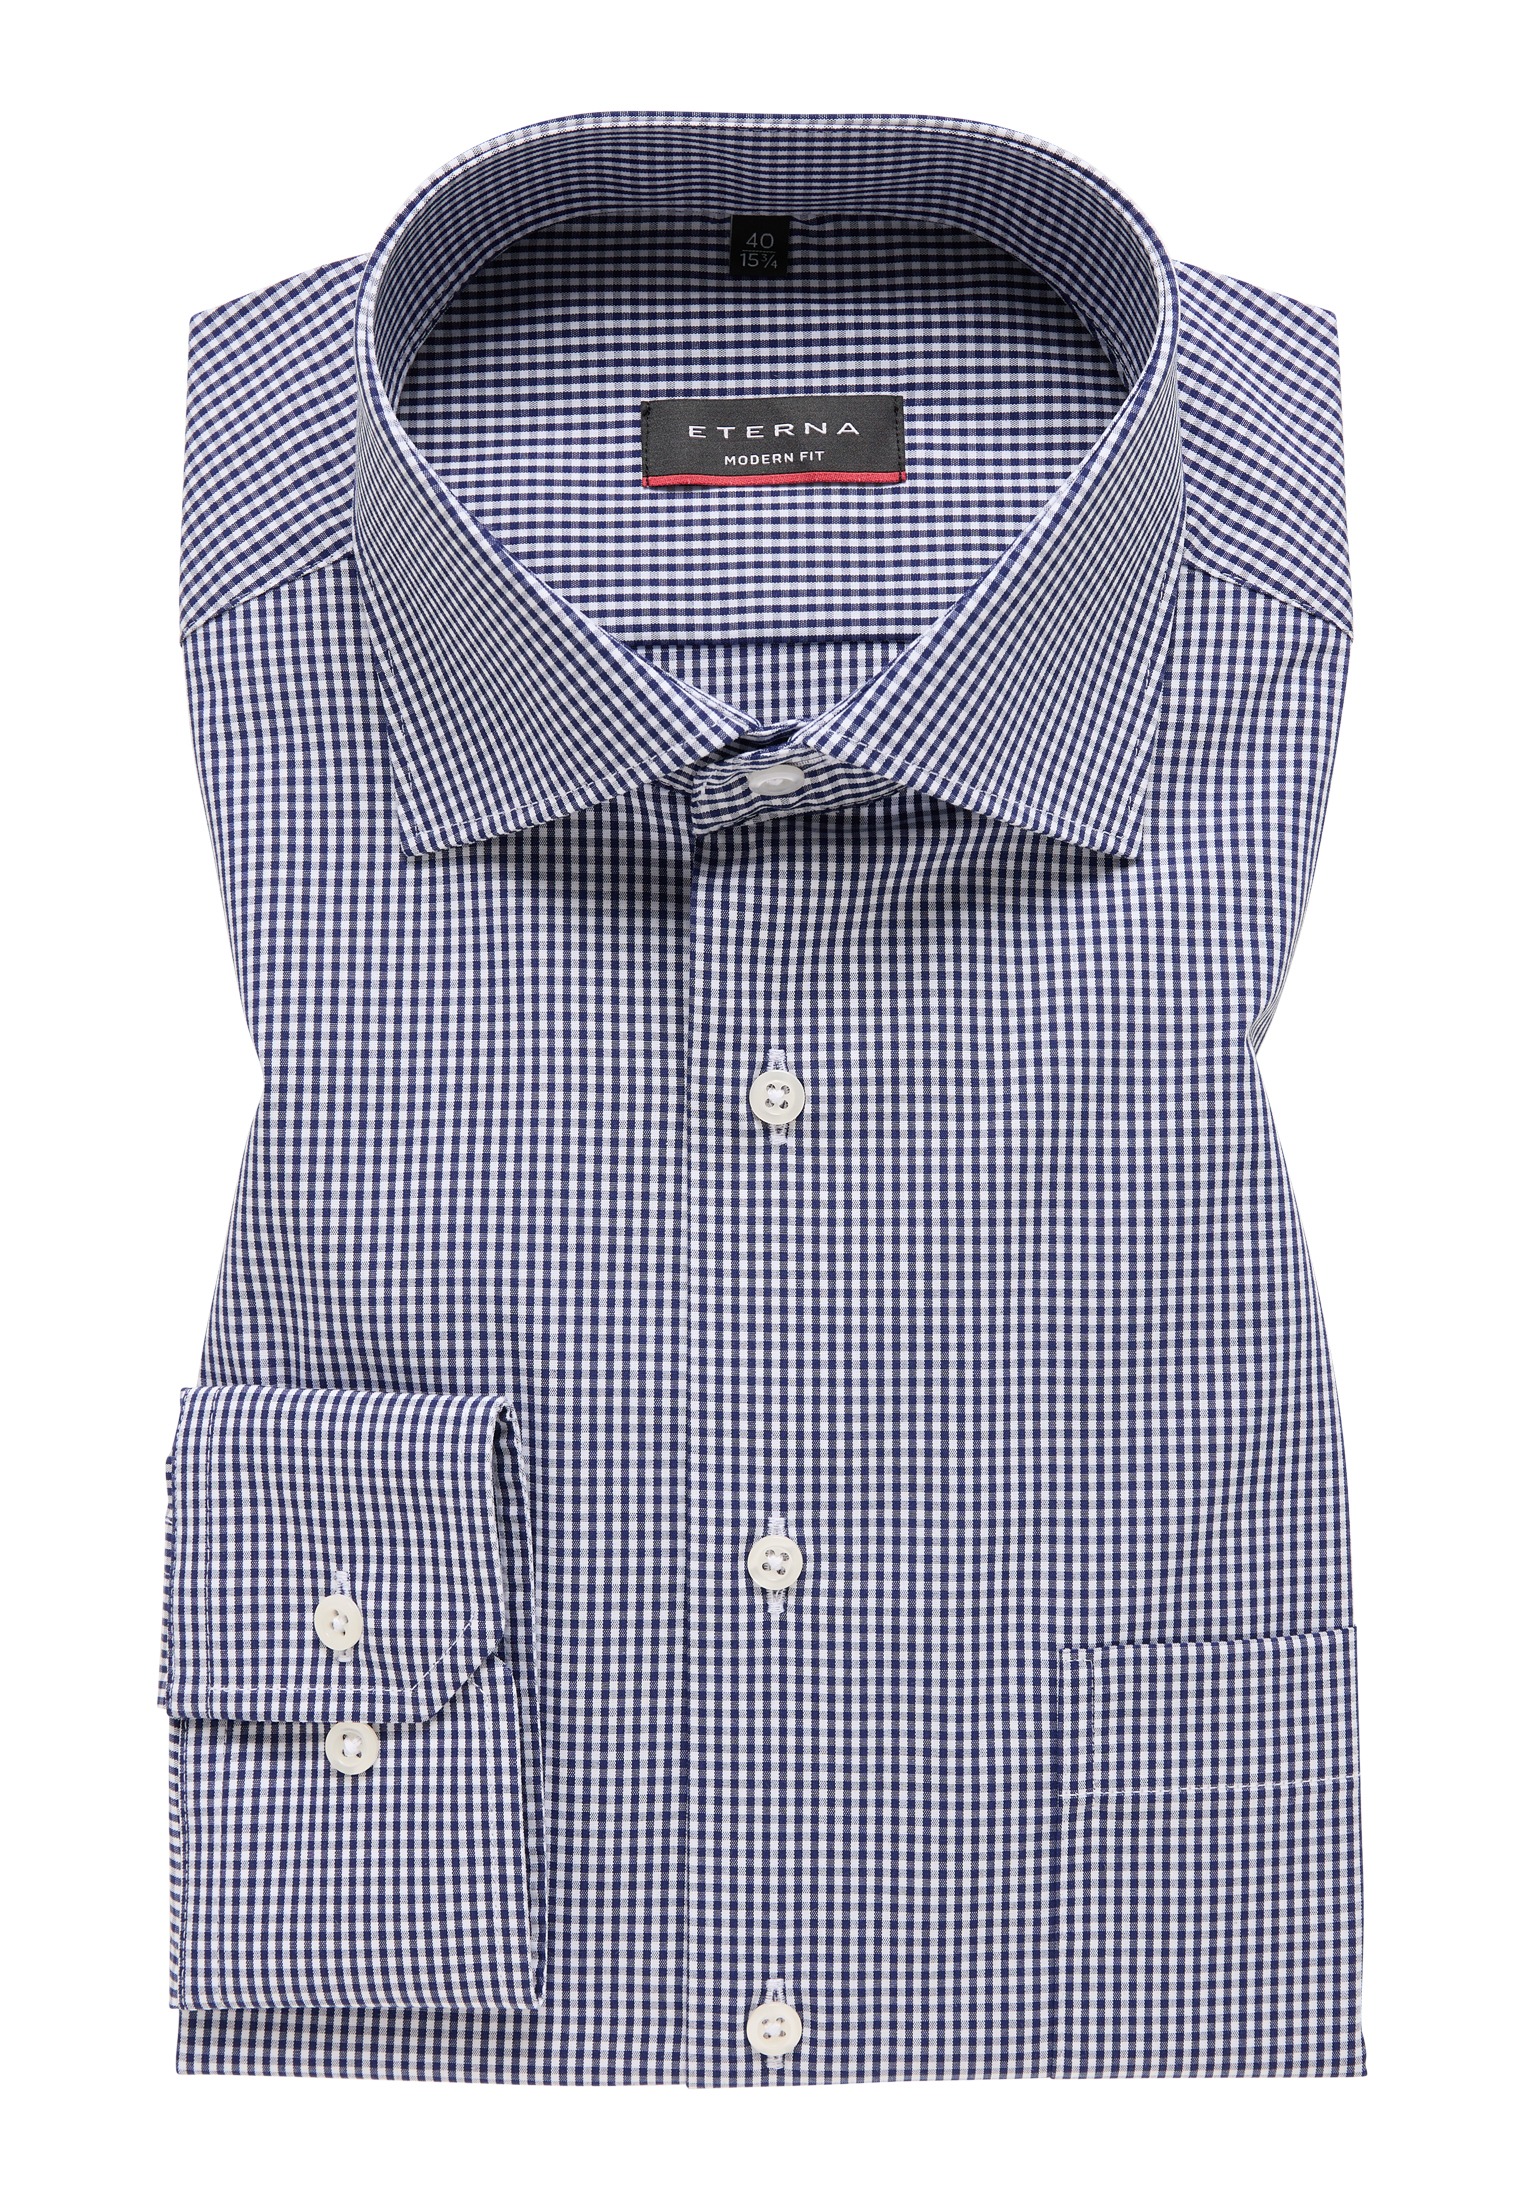 MODERN FIT | dark Shirt | | sleeve checkered blue blue 1SH11561-01-81-48-1/1 in | 48 dark long